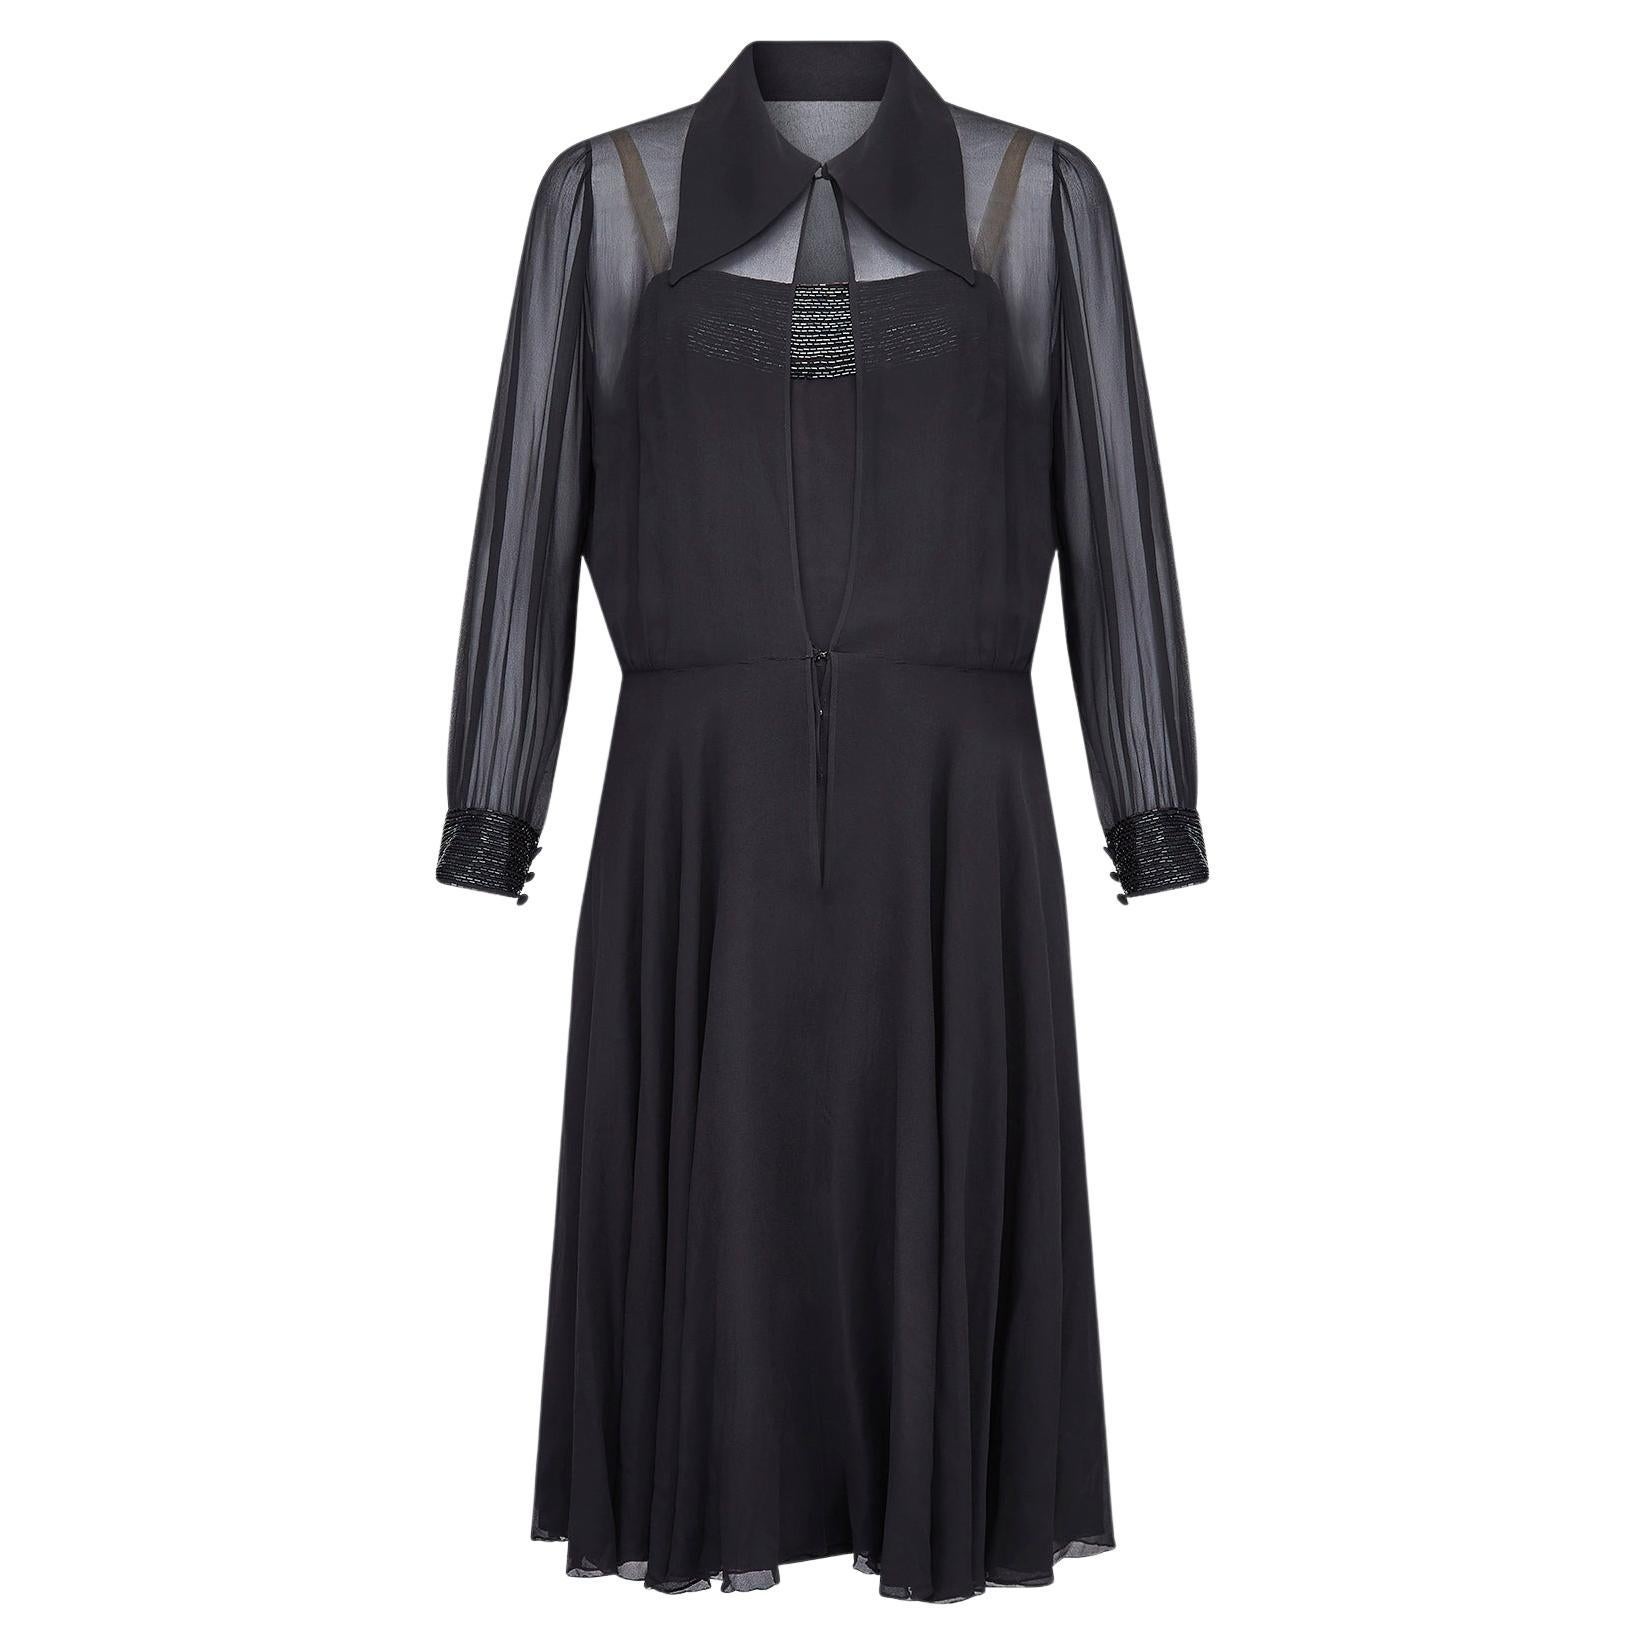 1960s Jacqueline Godard Couture Black Silk Chiffon Dress Ensemble For Sale